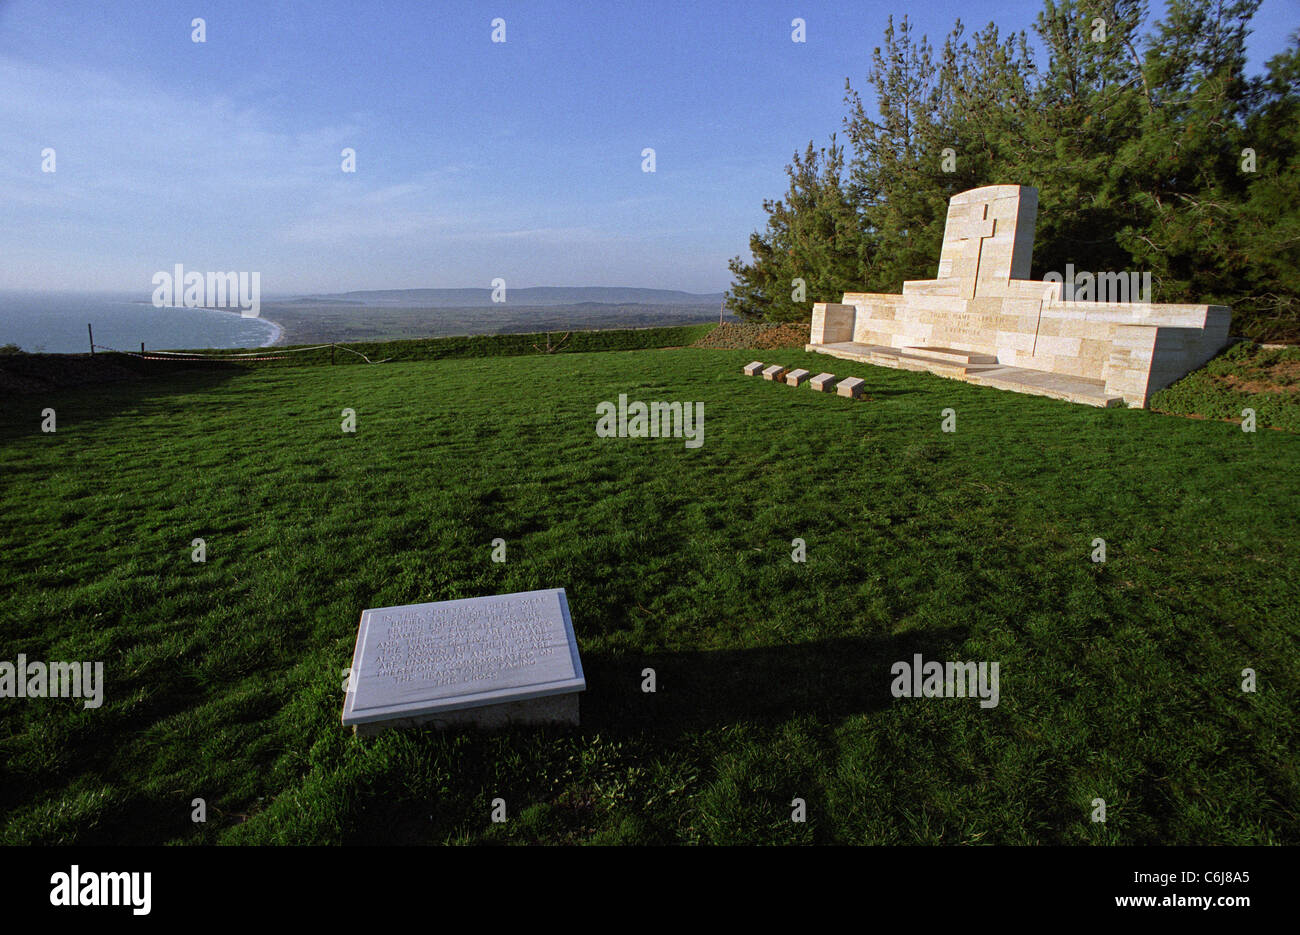 El Nek cementerio, Campo de Batalla de Gallipoli Turquía desde 1915 campaña. Mantenido por ela Comisión de tumbas de guerra. Foto de stock